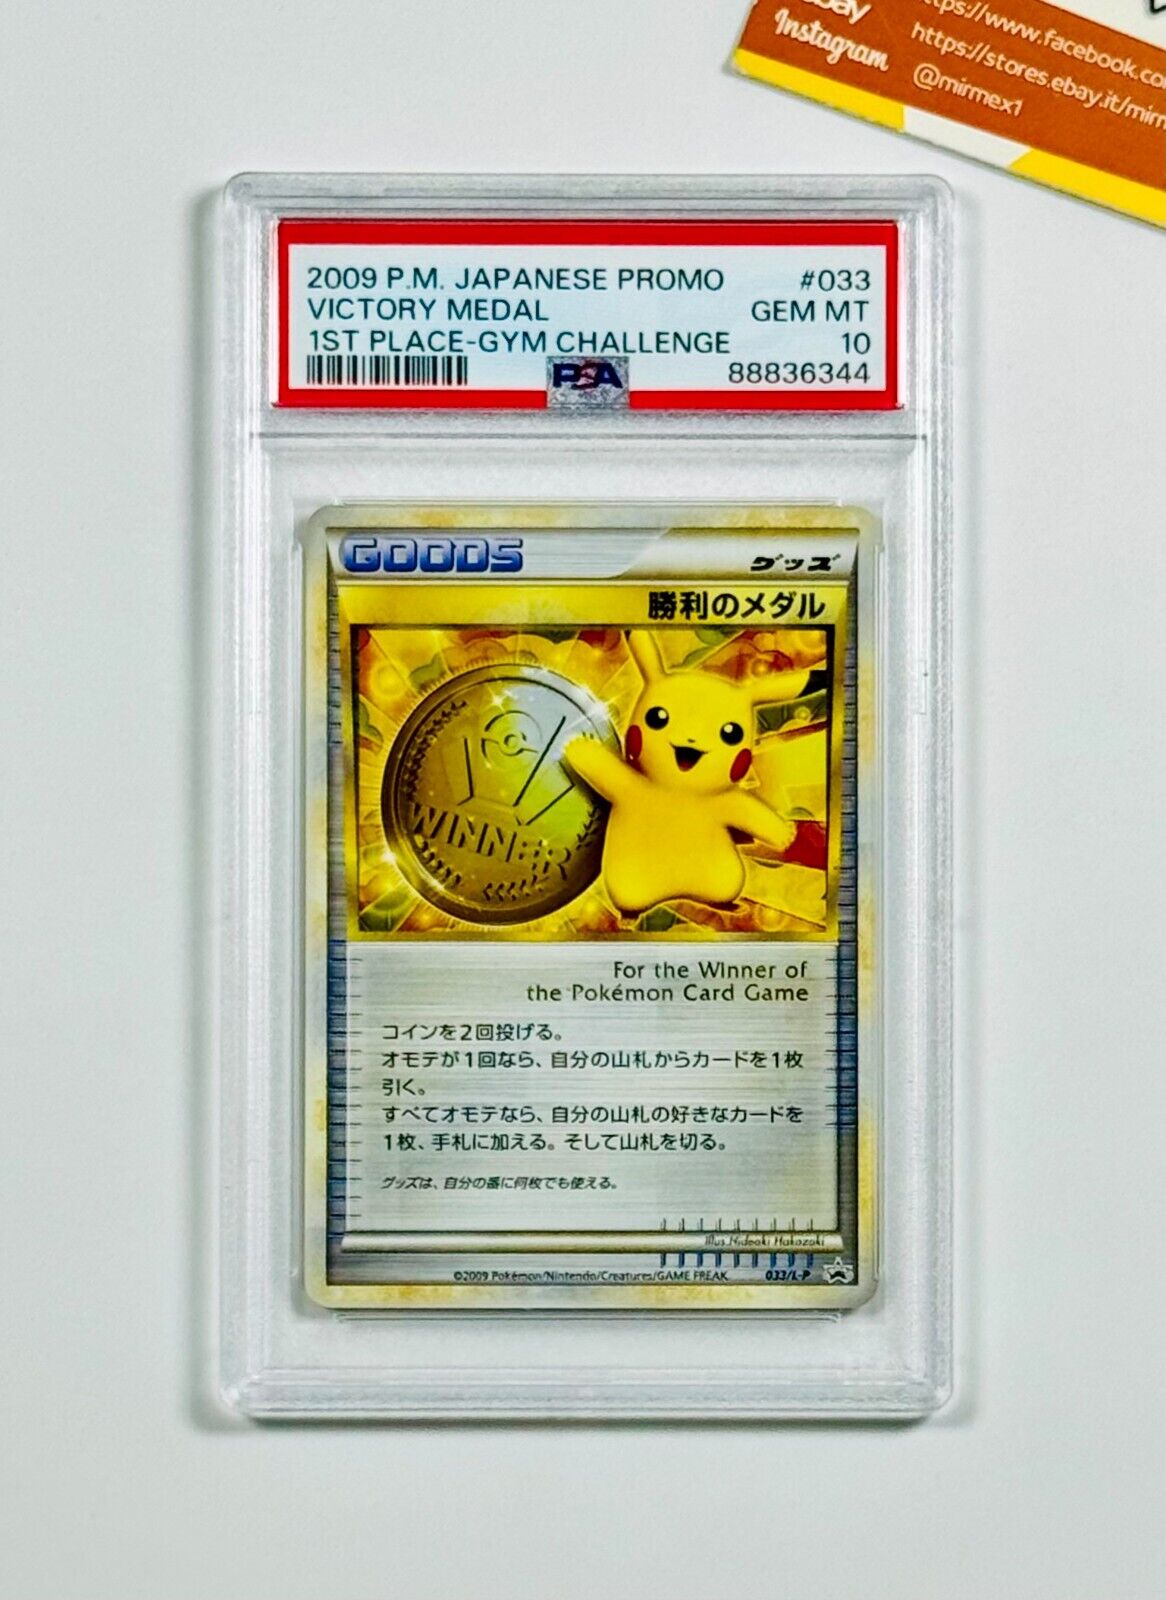 Pokemon PSA 10 Victory Medal #033 1st Place Gym Challenge Promo 2009 Japanese